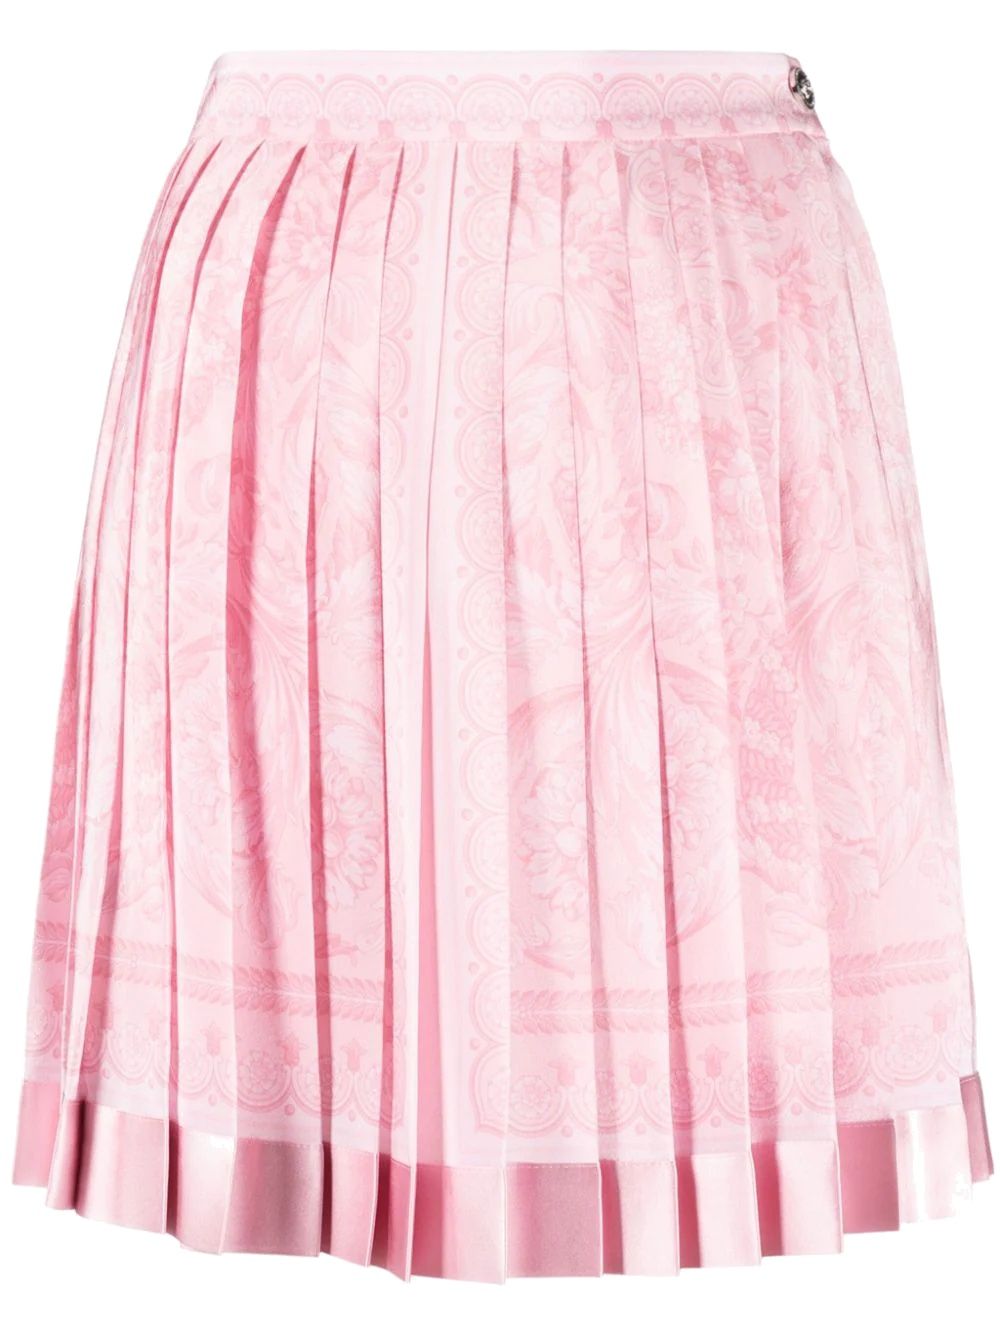 Baroque print skirt